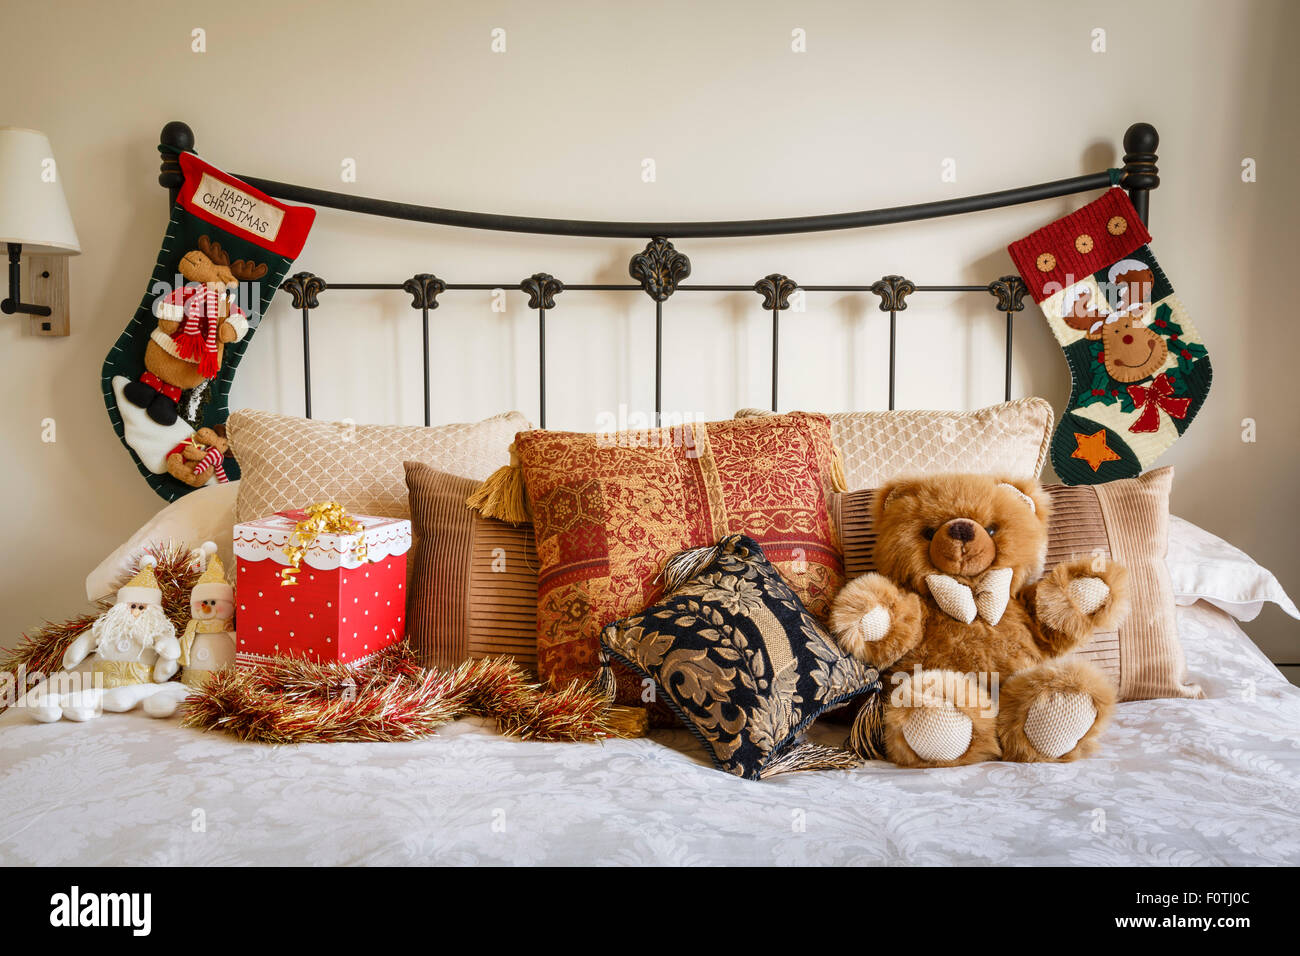 Cozy Christmas bedroom scene with Christmas stockings on bedstead Stock Photo